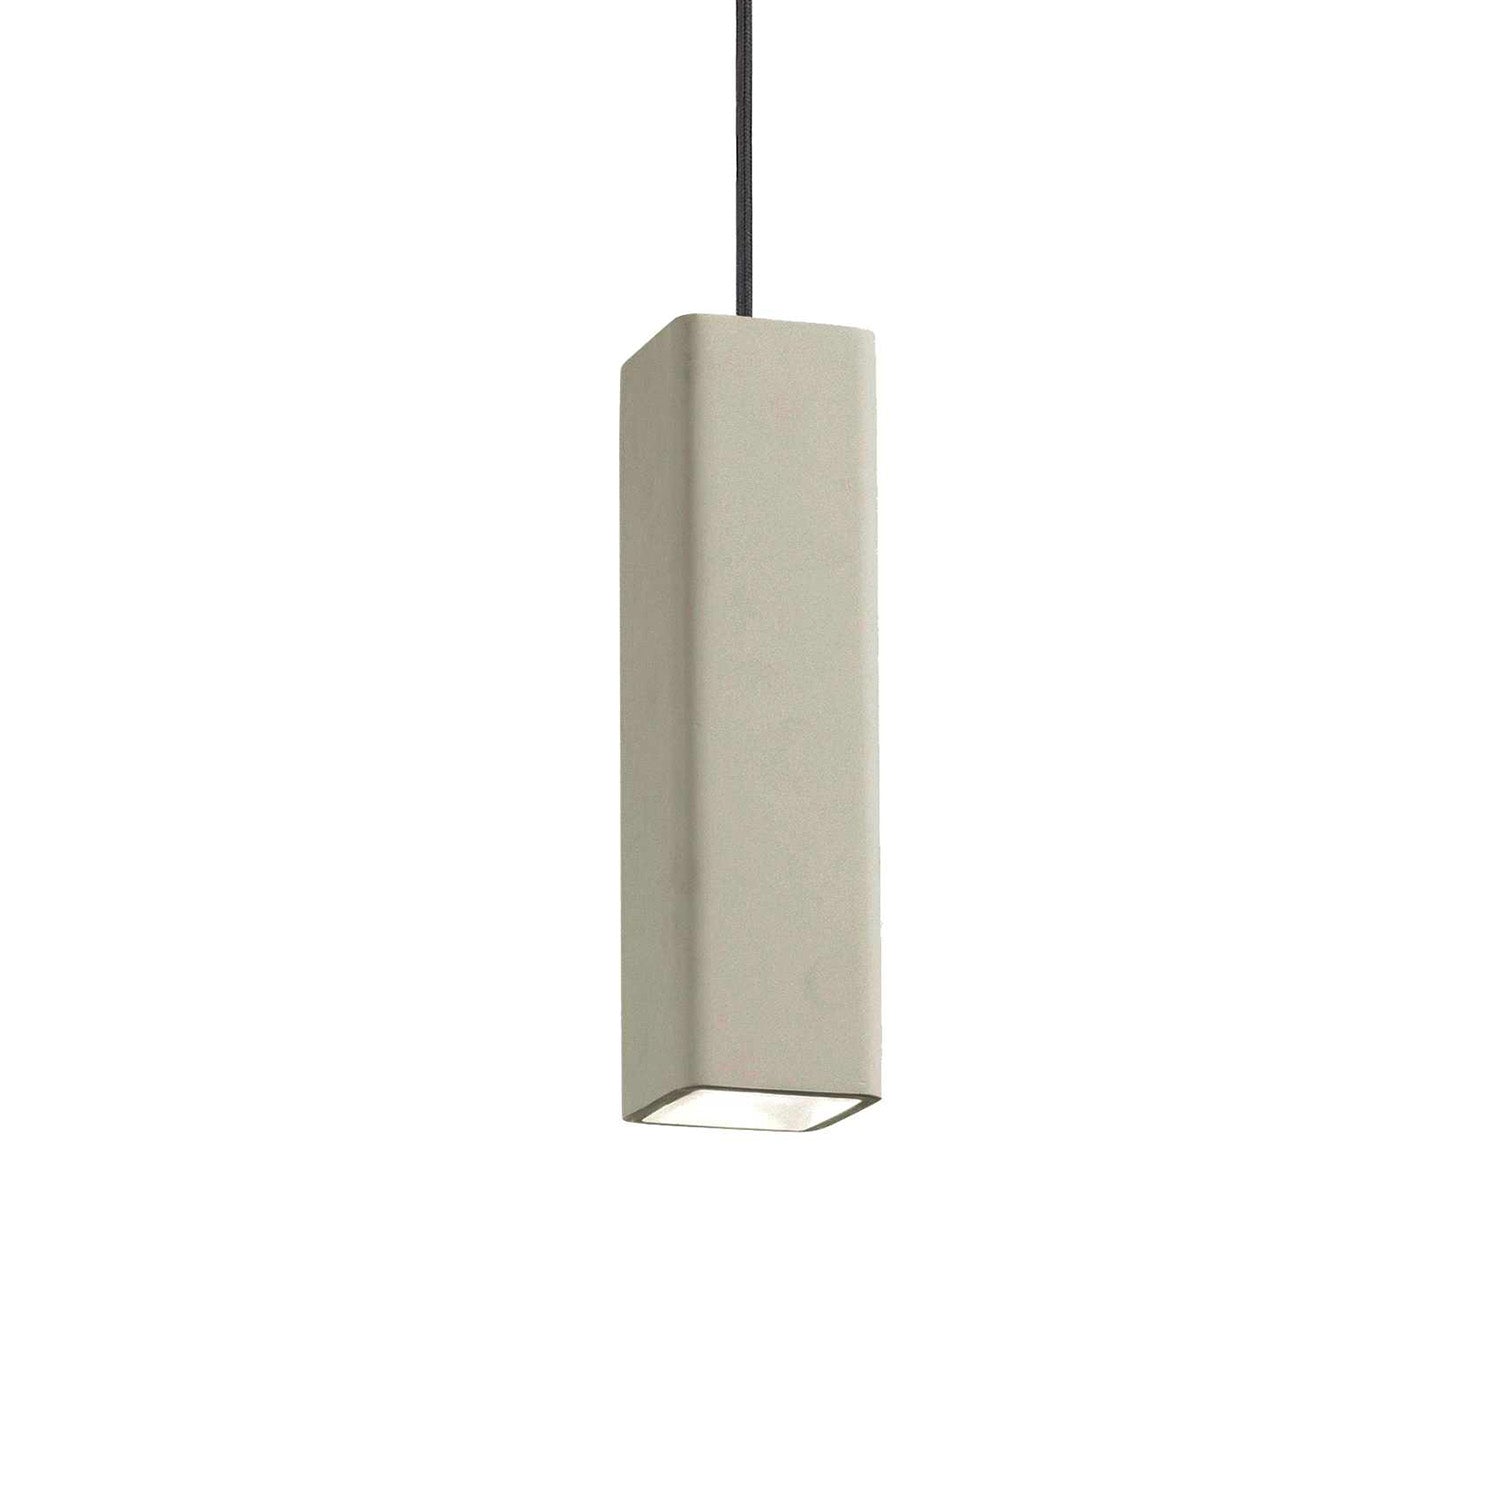 OAK - Modern square concrete pendant light